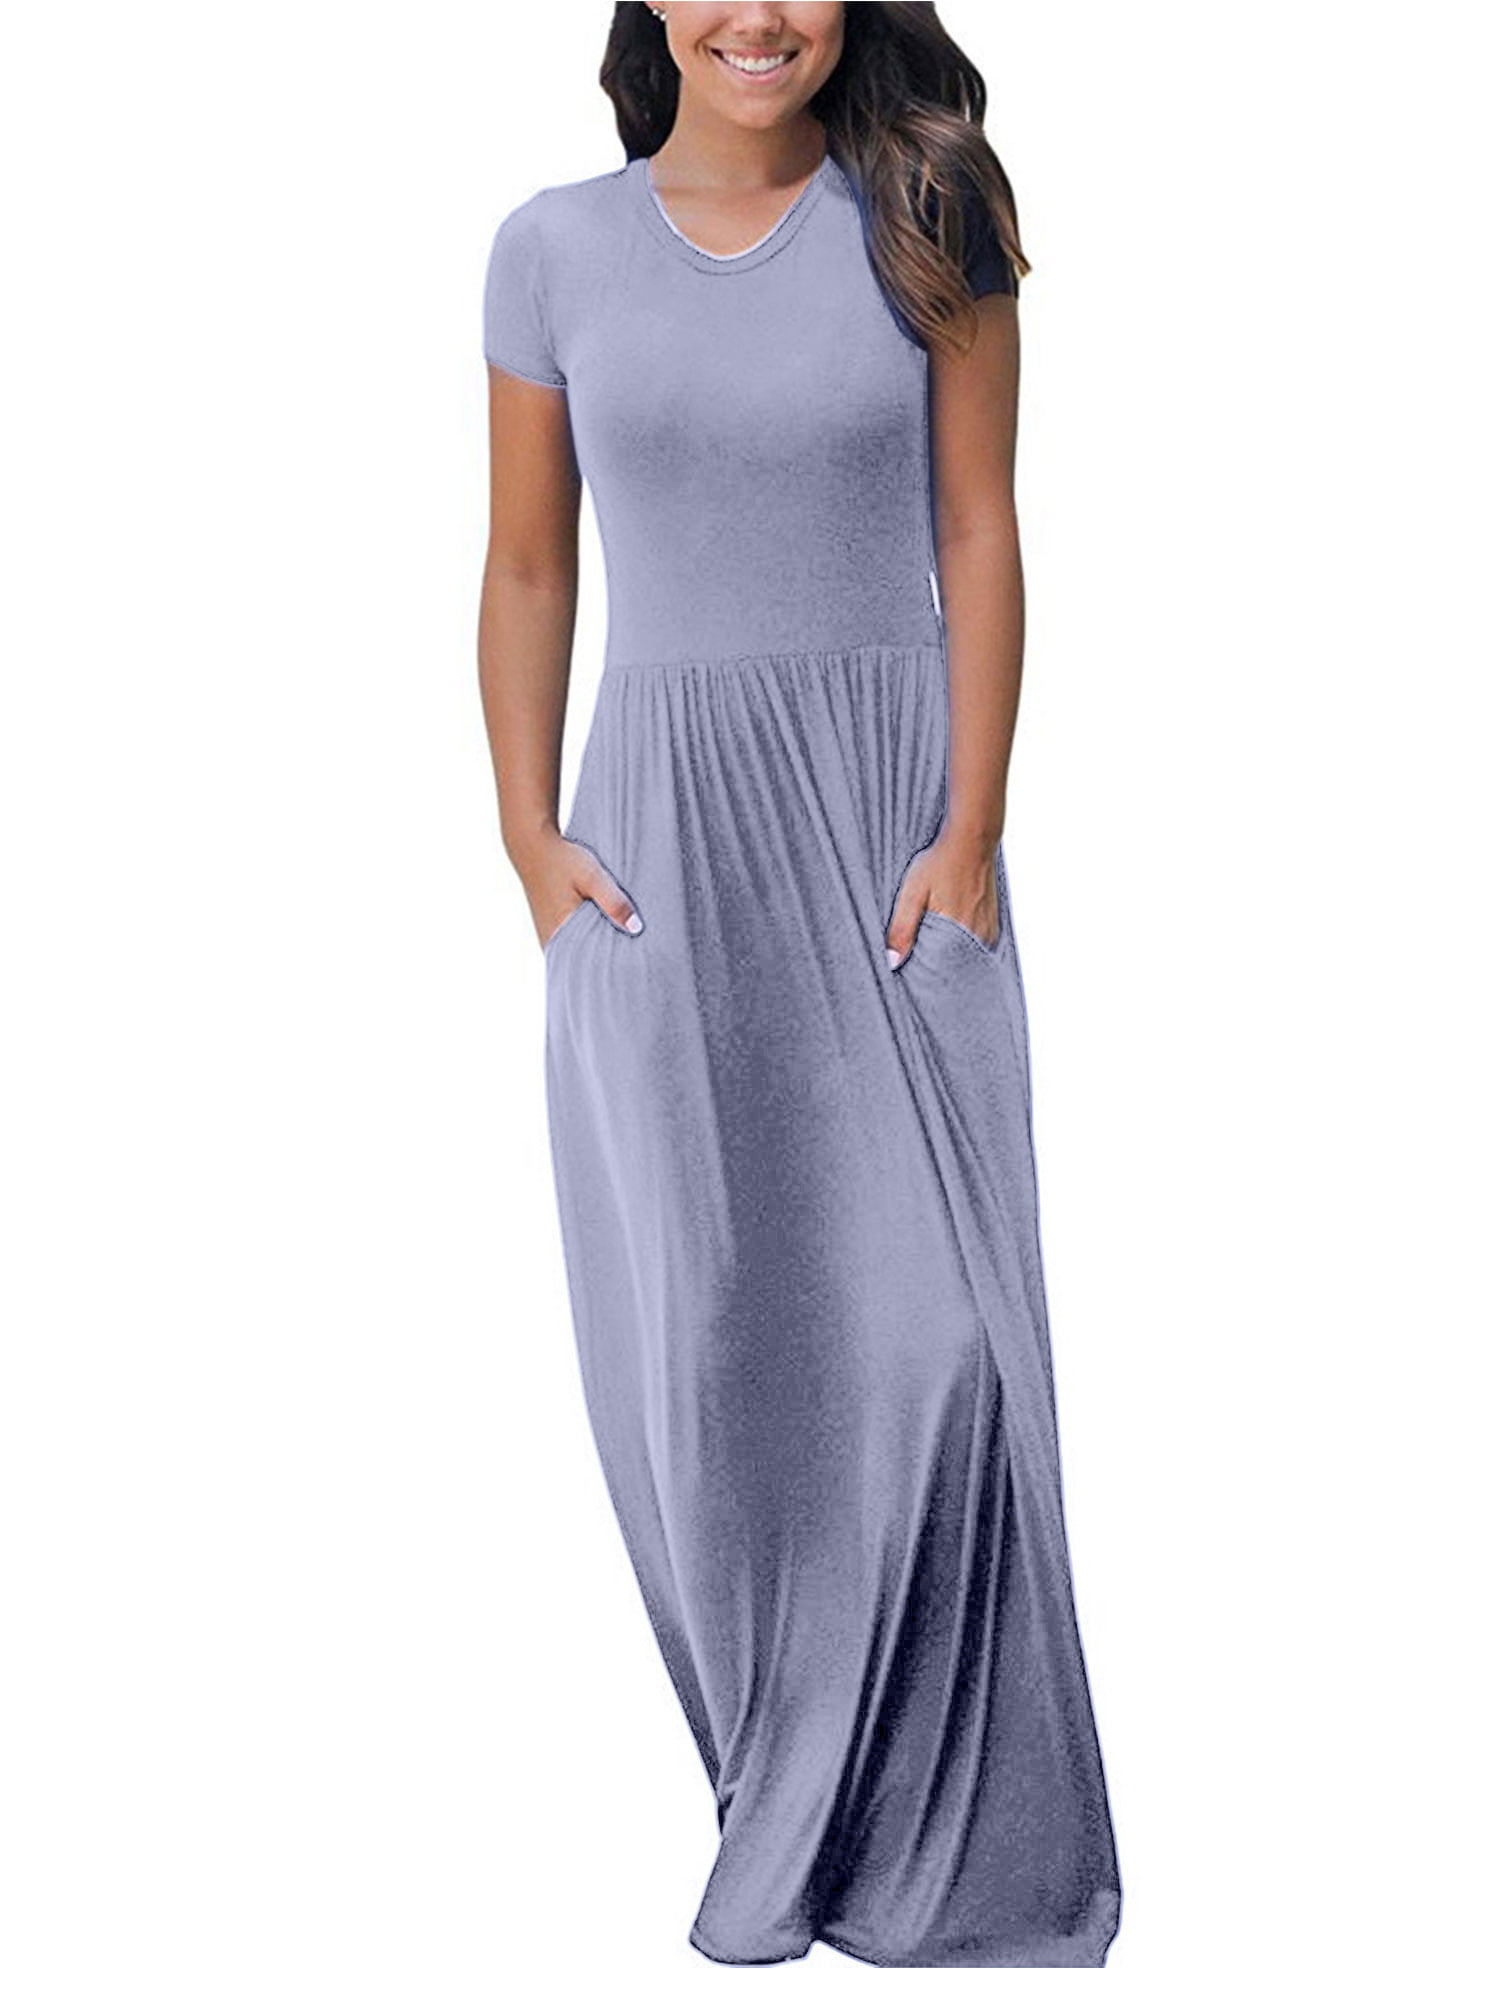 Women Long Maxi Dress Casual Plus Size Fashion Dresses Baggy Grey ...